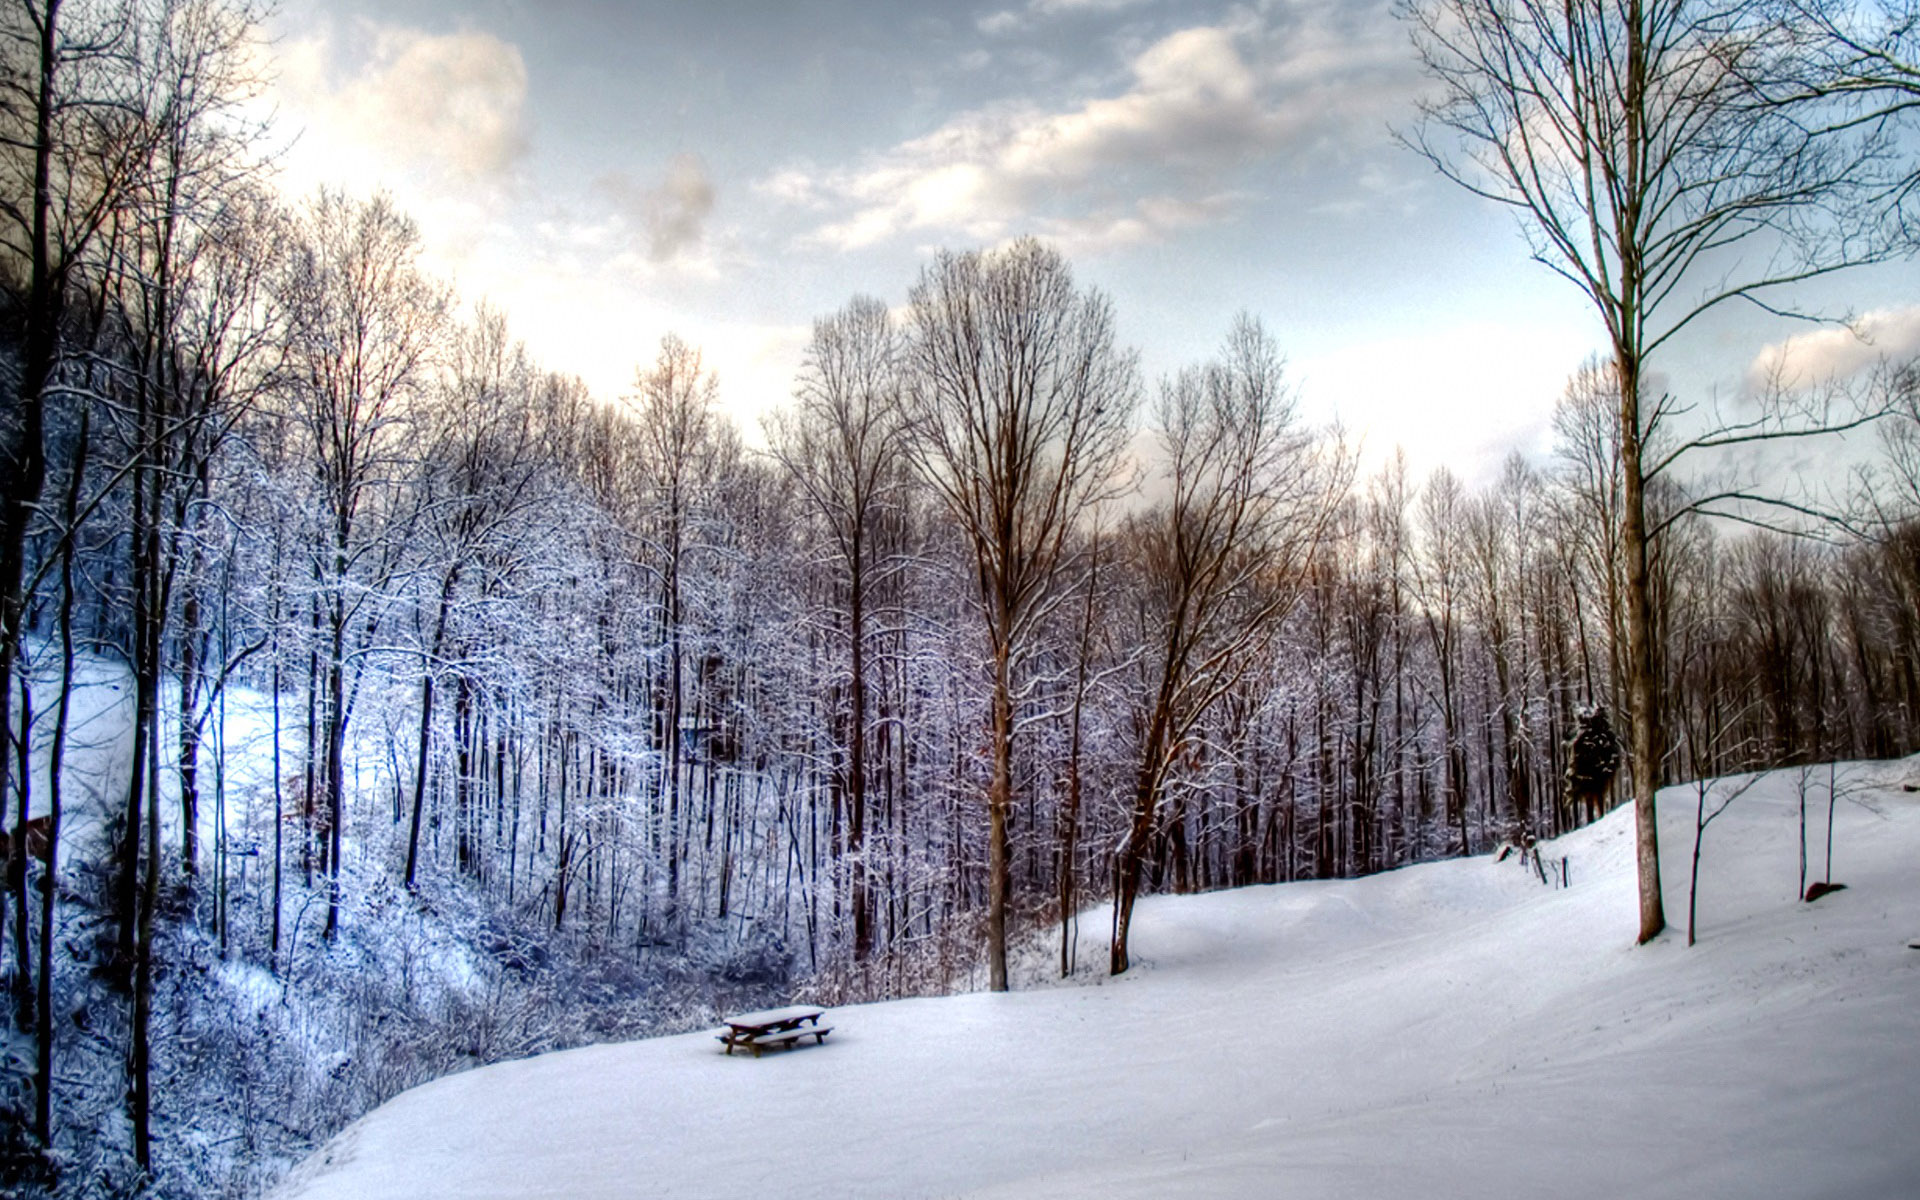 Free download 19201200 Widescreen Winter Snow Scenes Dreamy Winter